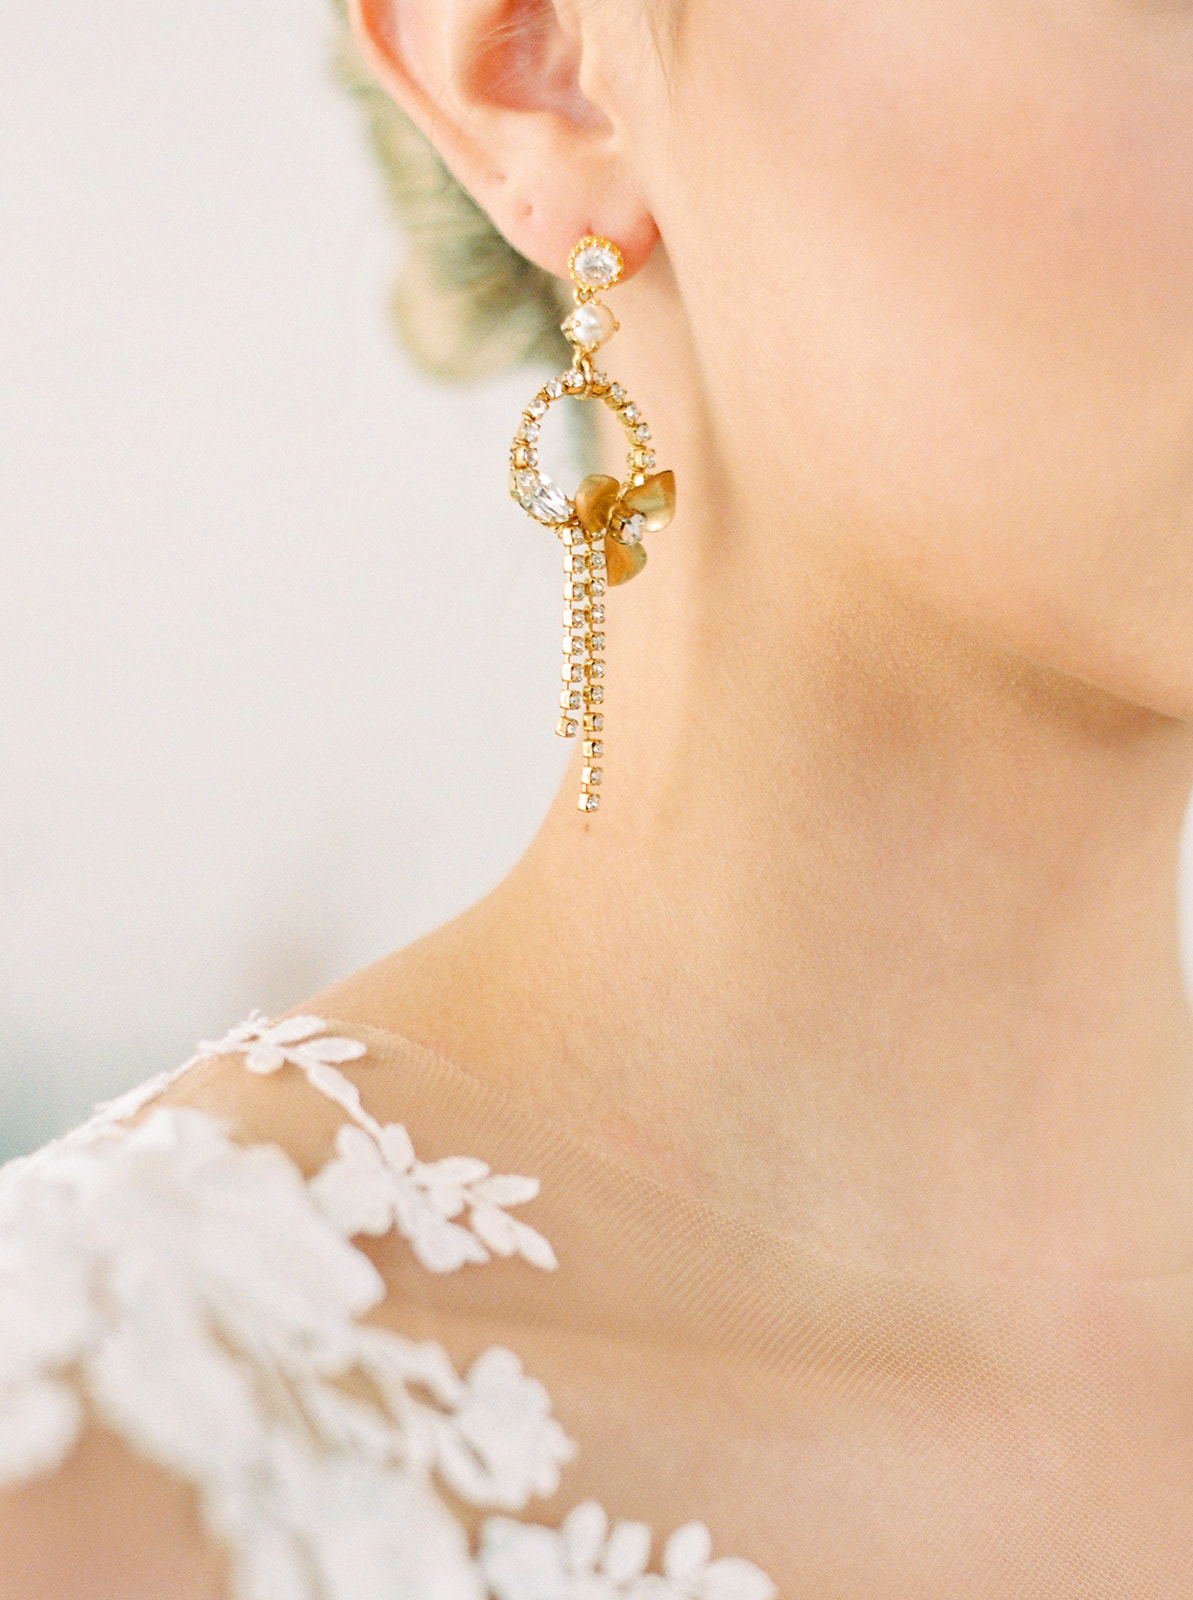 Gold bridal earrings by Joanna Bisley Design